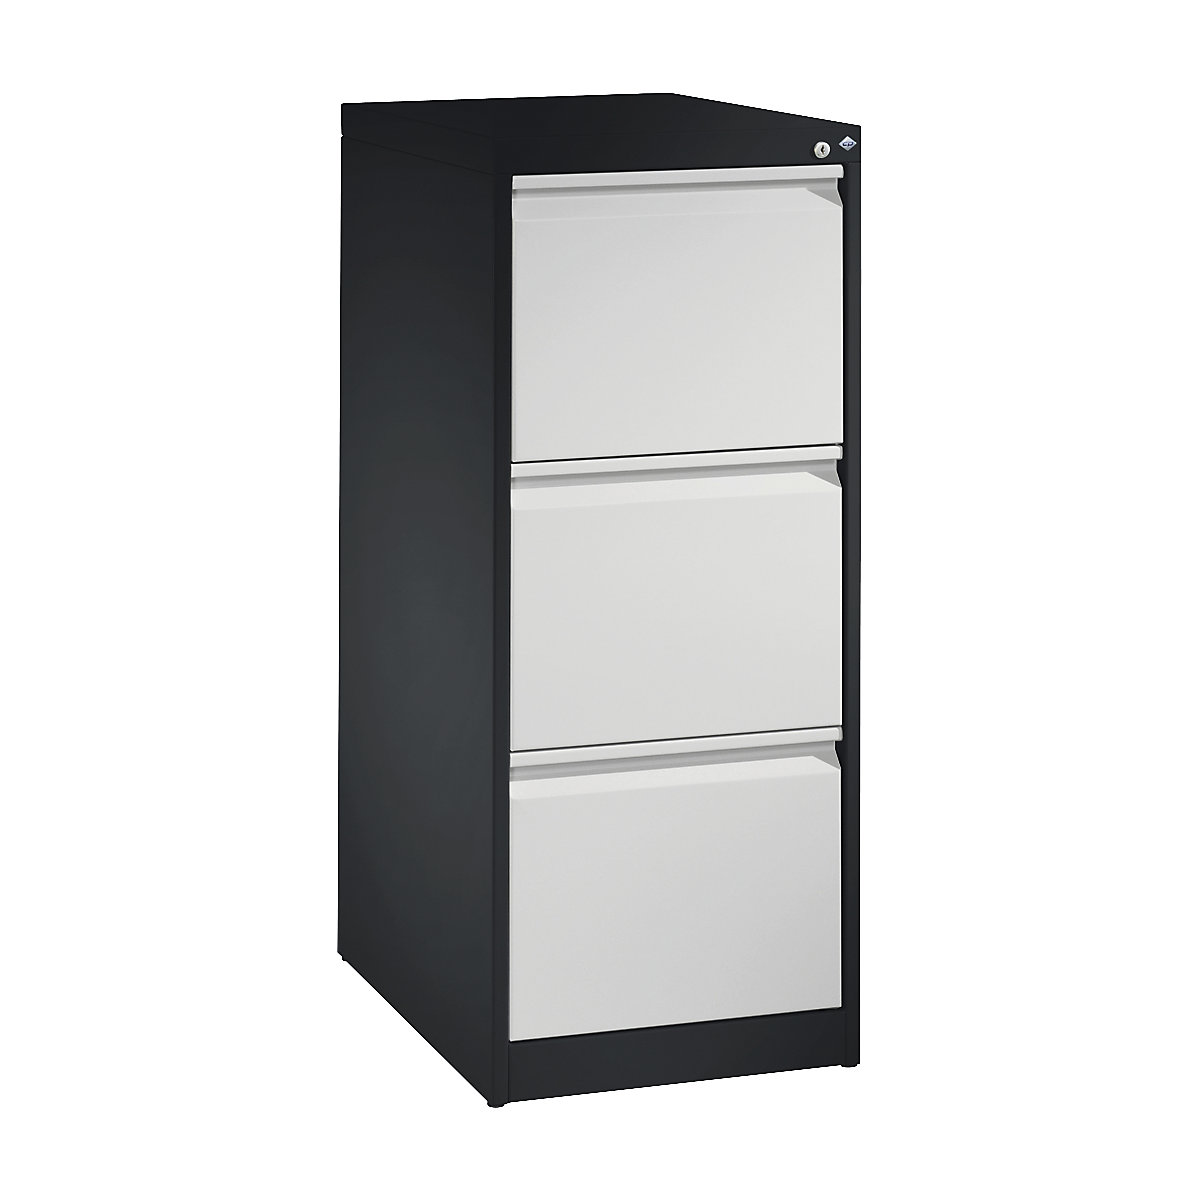 C+P – ACURADO suspension filing cabinet, 1 track, 3 drawers, black grey / light grey